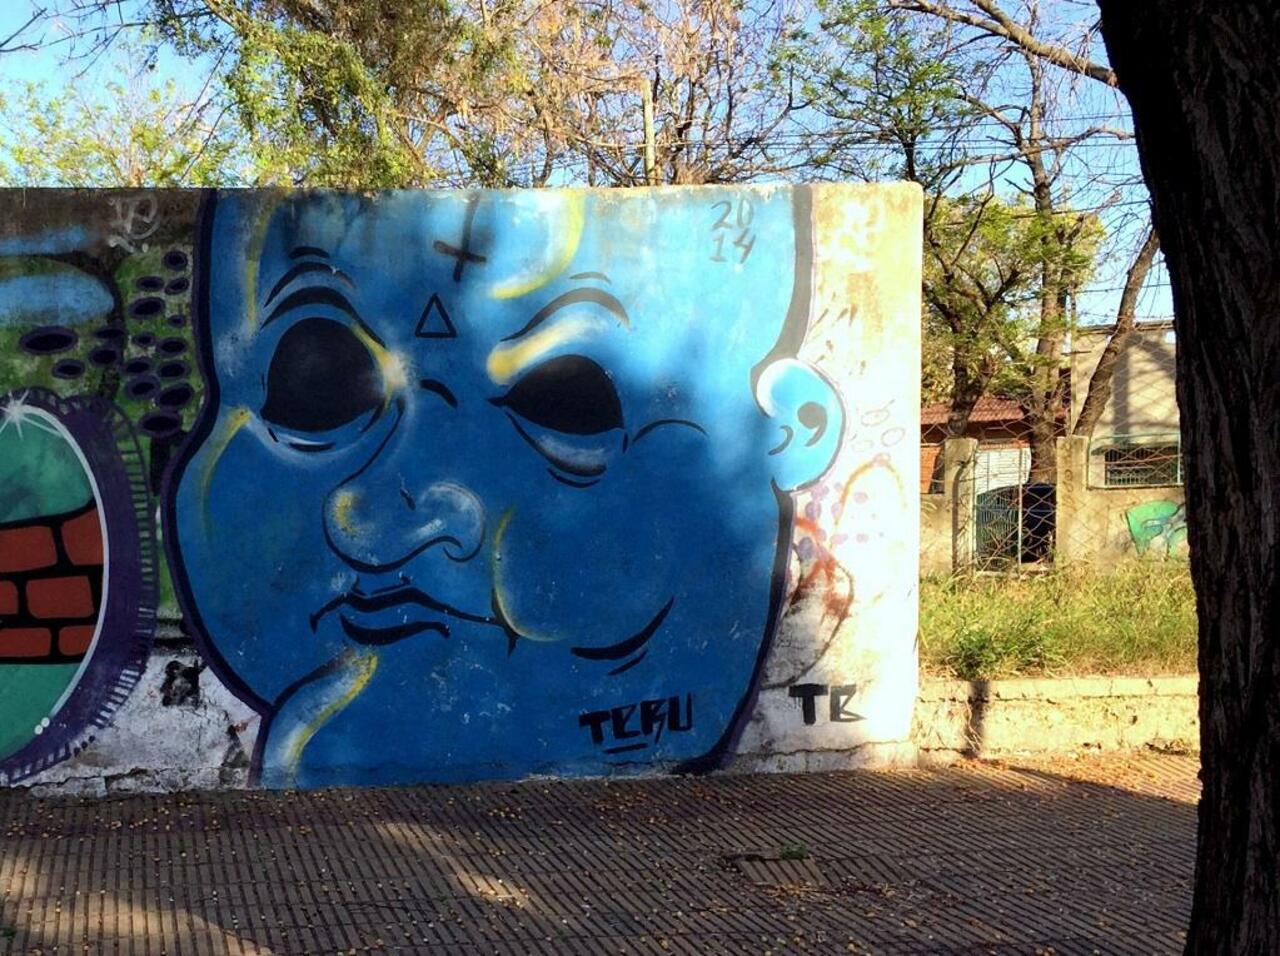 #Graffiti de hoy: << El ciego azul >> Diag. 76y48 #LaPlata #Argentina #StreetArt #UrbanArt #ArteUrbano http://t.co/GyK0YfDVXl